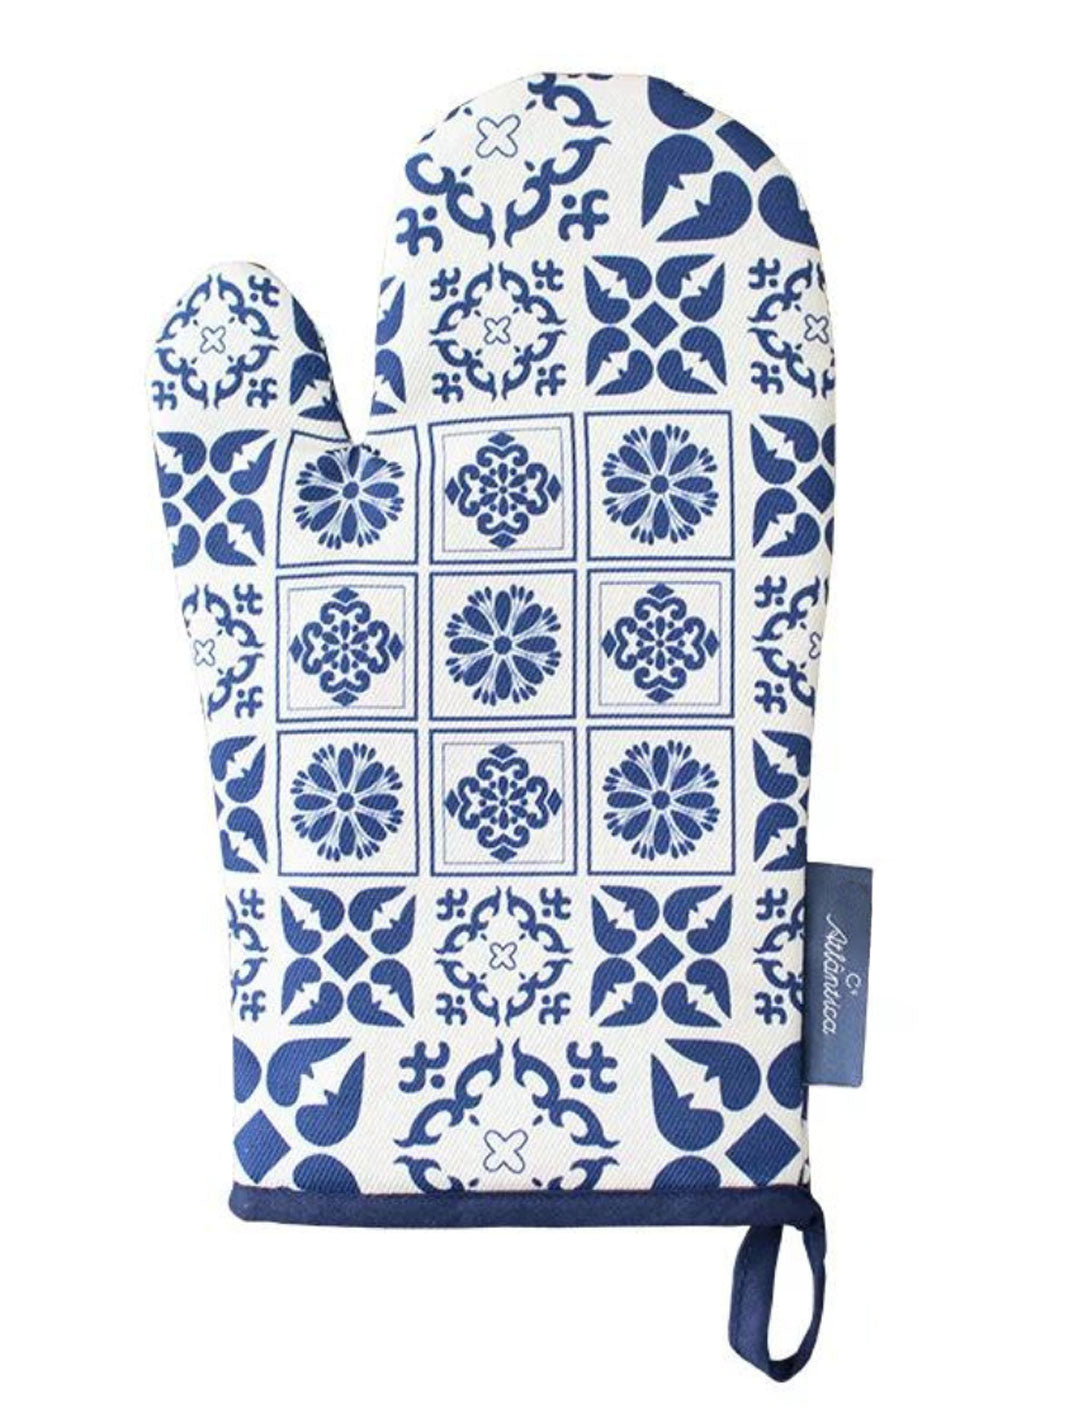 Traditional Portuguese Tiles Inspired Blue & White Oven Mitt